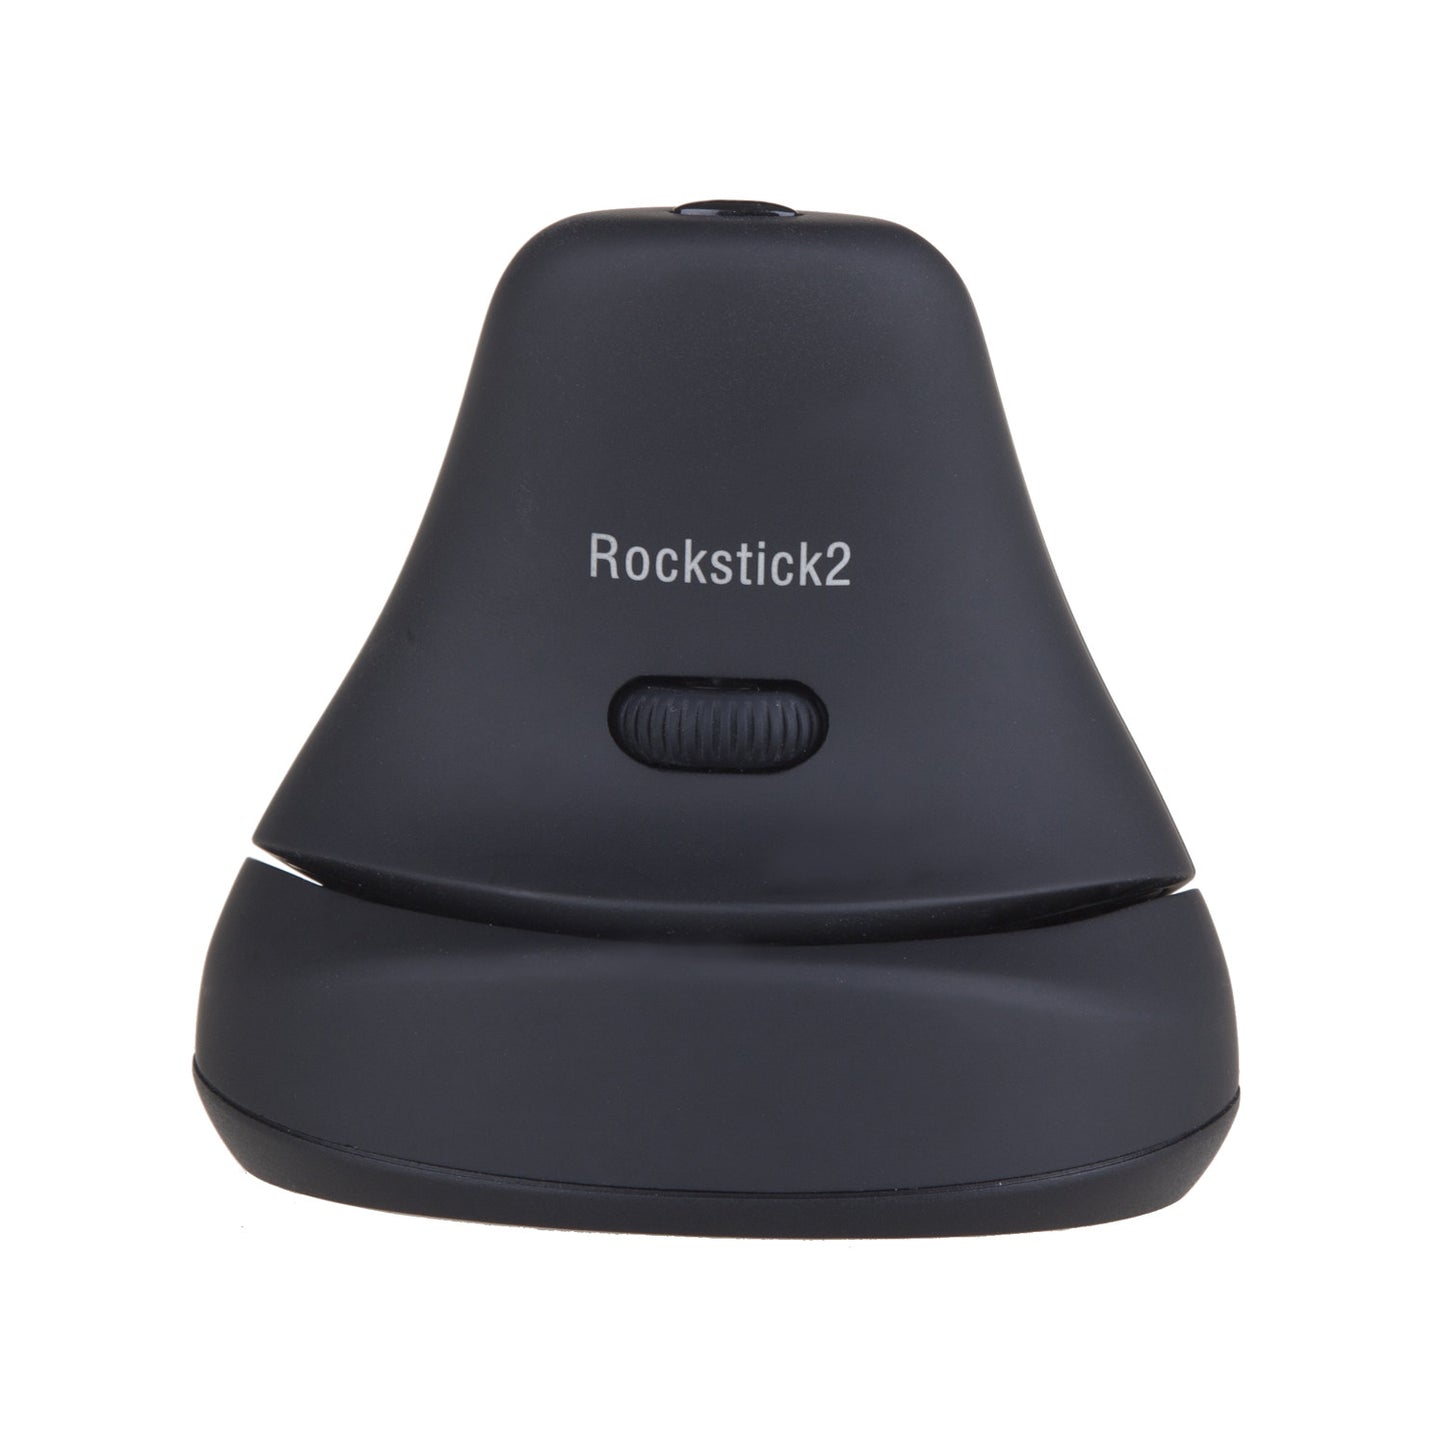 Rockstick 2 Mouse | Wireless